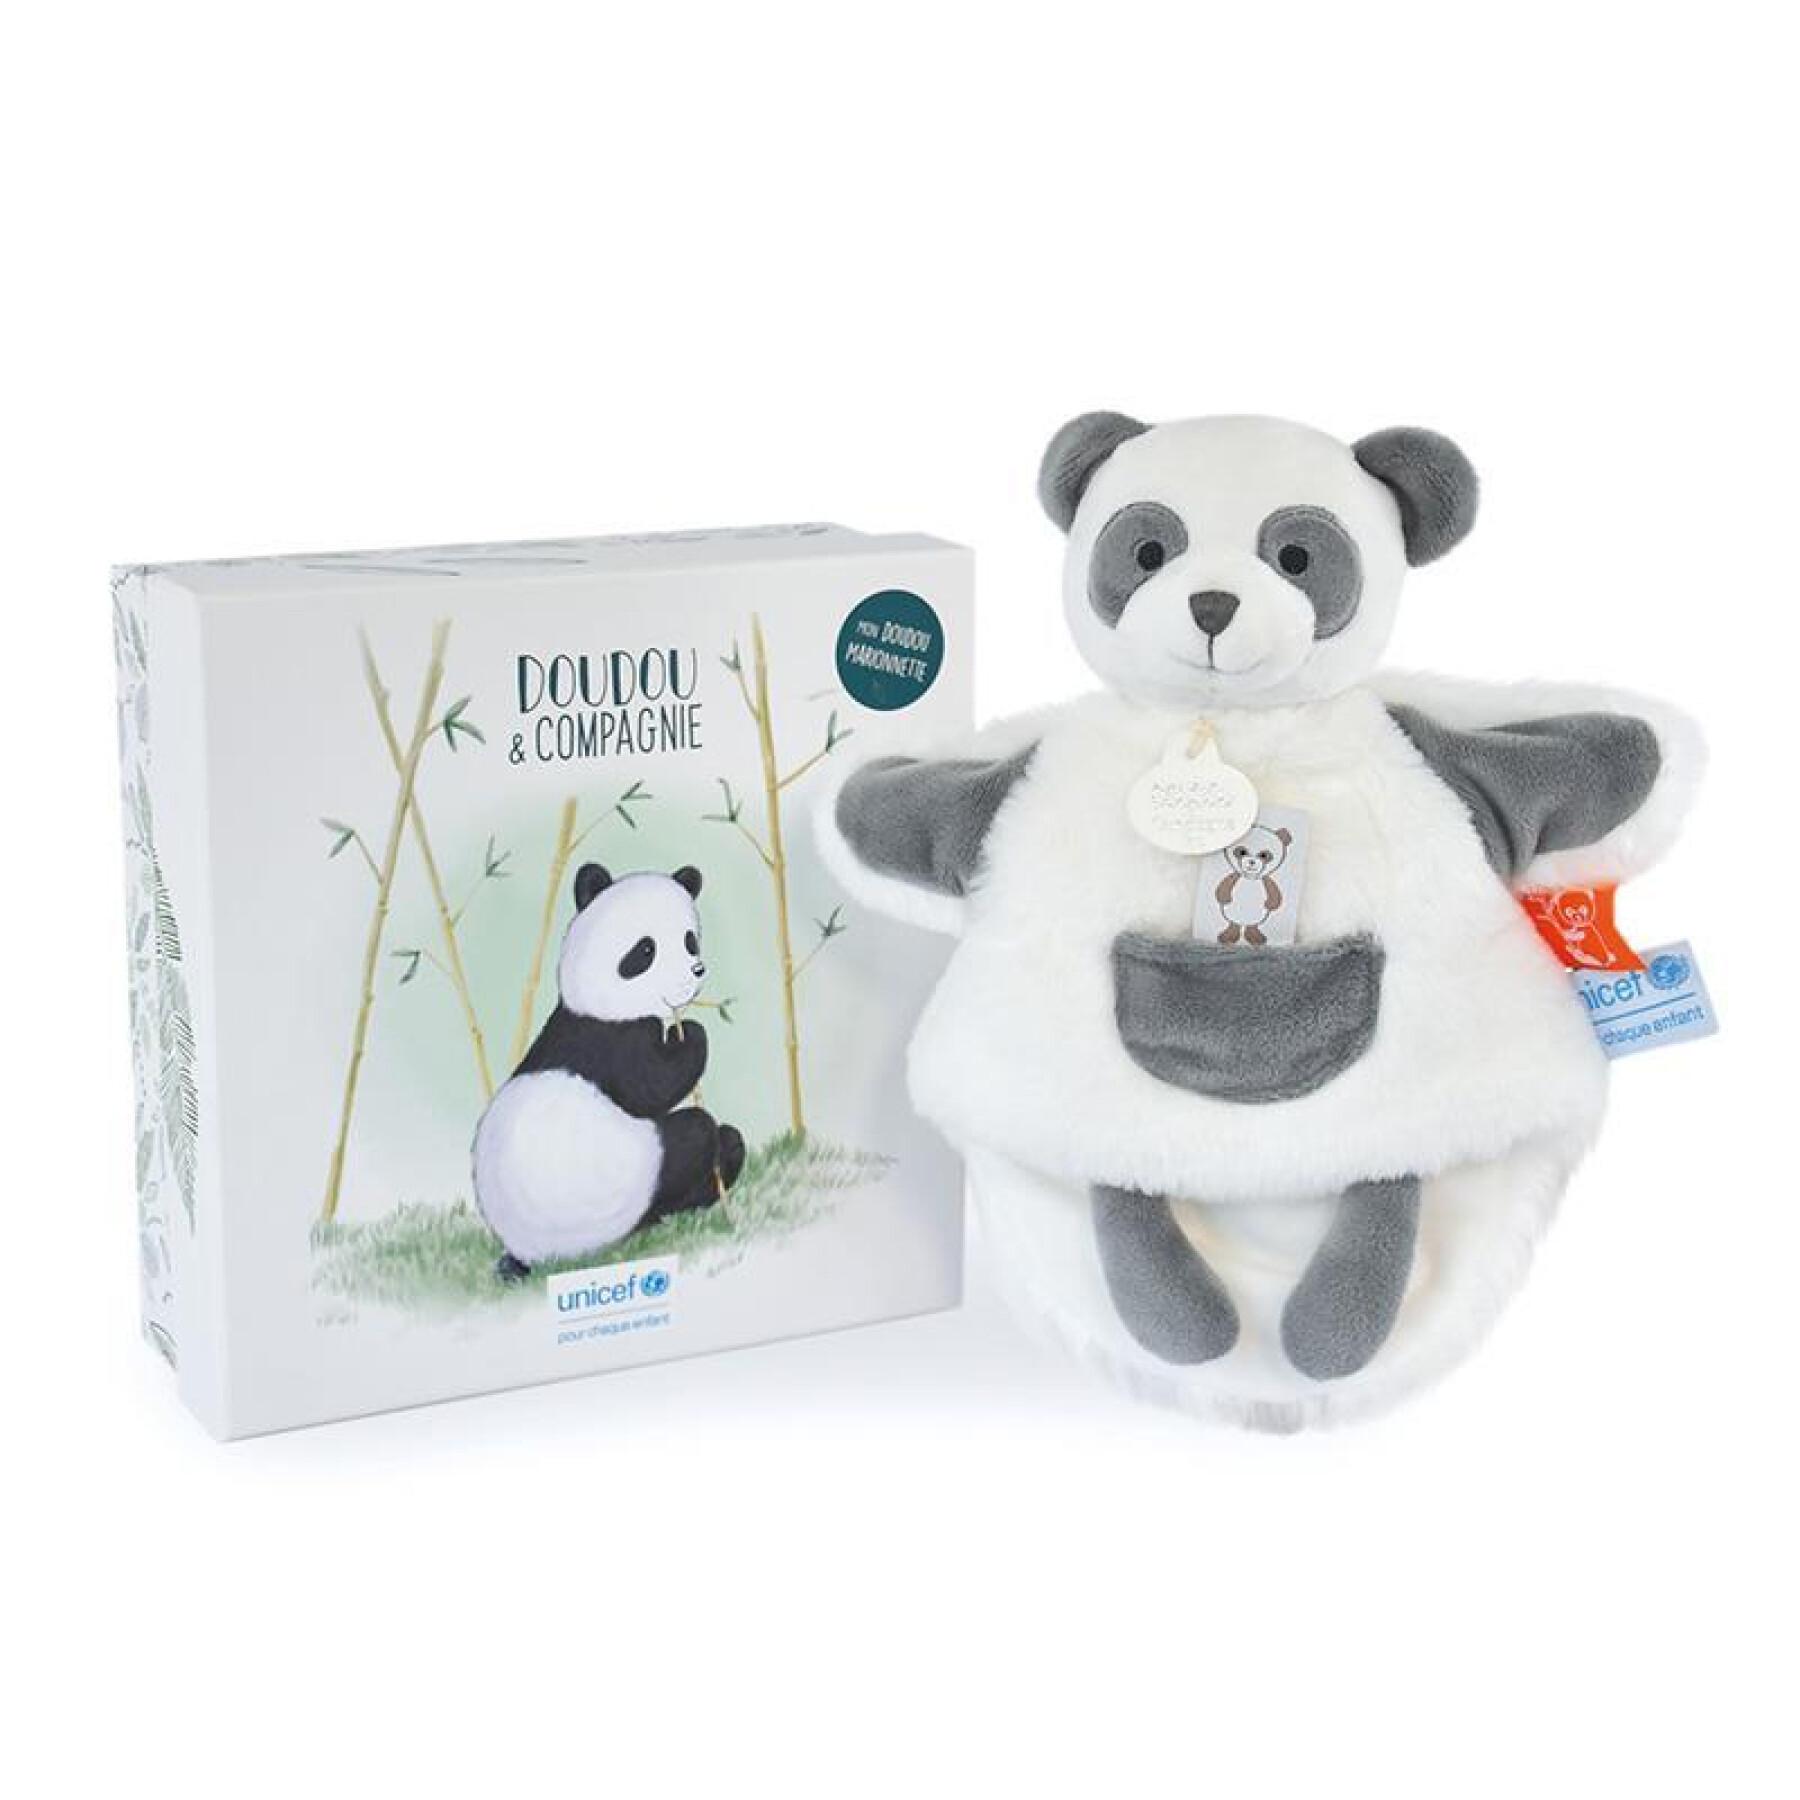 Burattino Doudou & compagnie Unicef - Panda